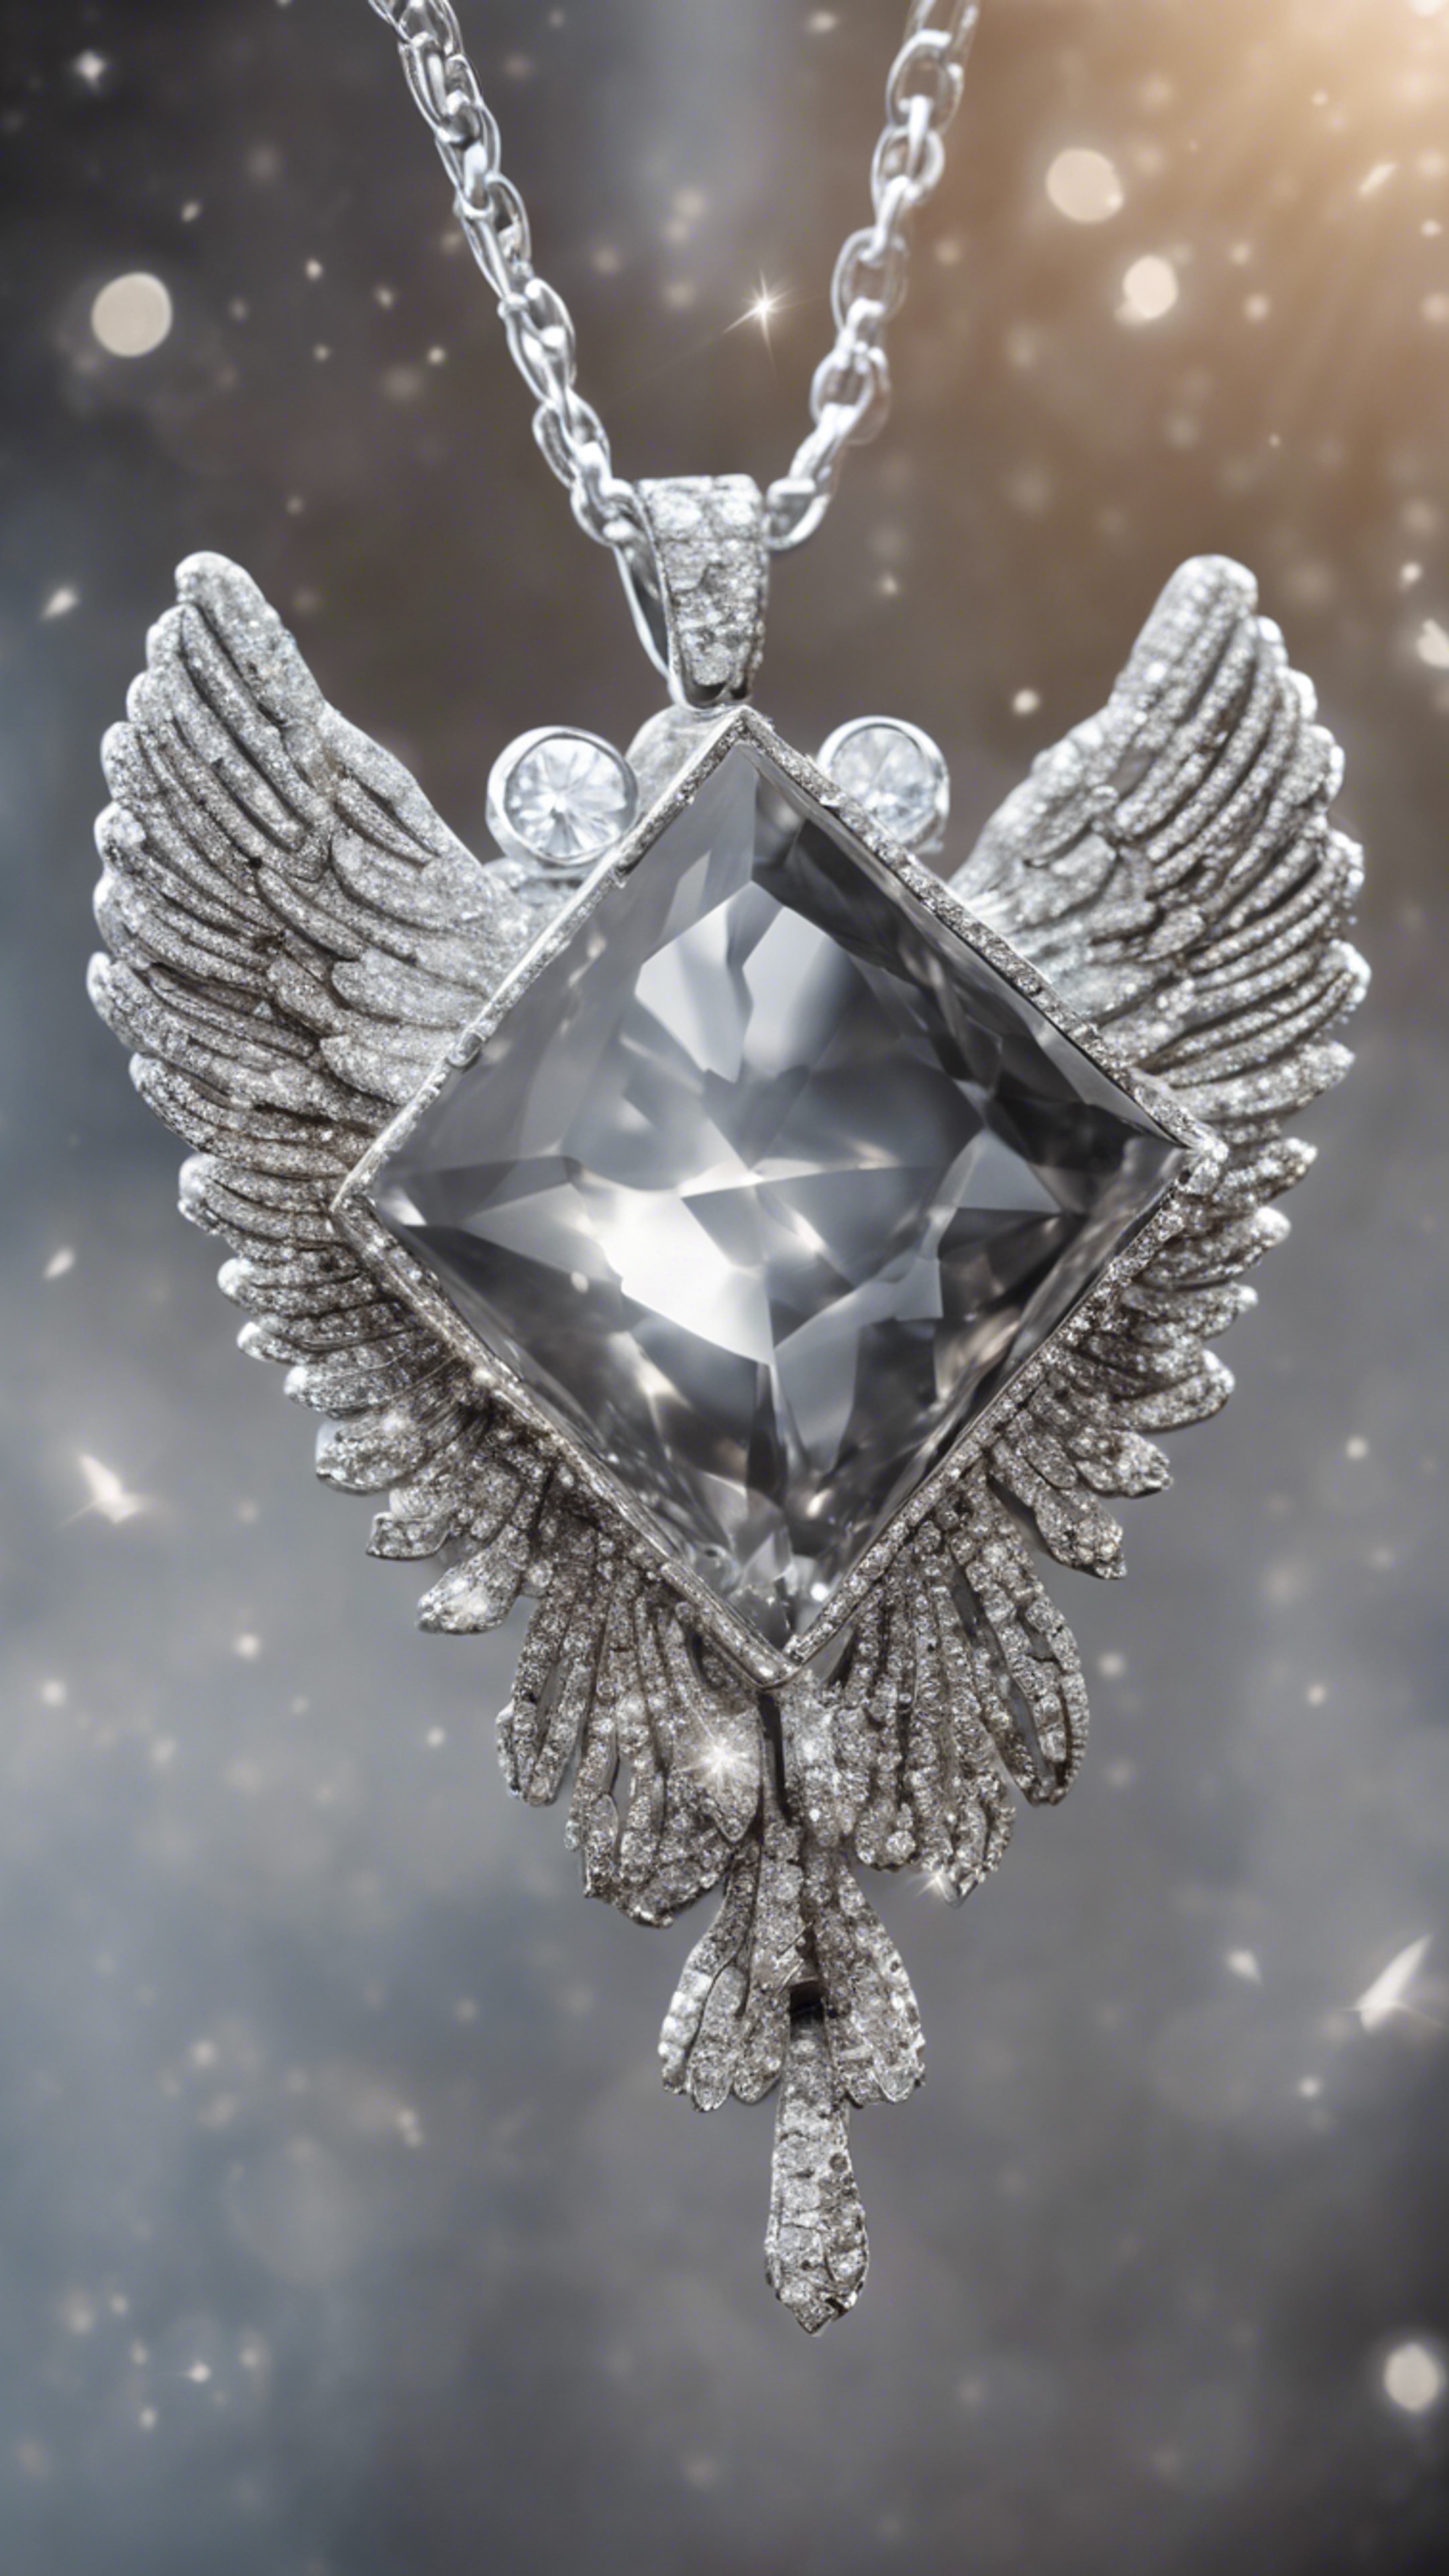 A gray diamond wrapped in the wings of a silver angel pendant. Fond d'écran[ad1b9e387c144e34b8b5]